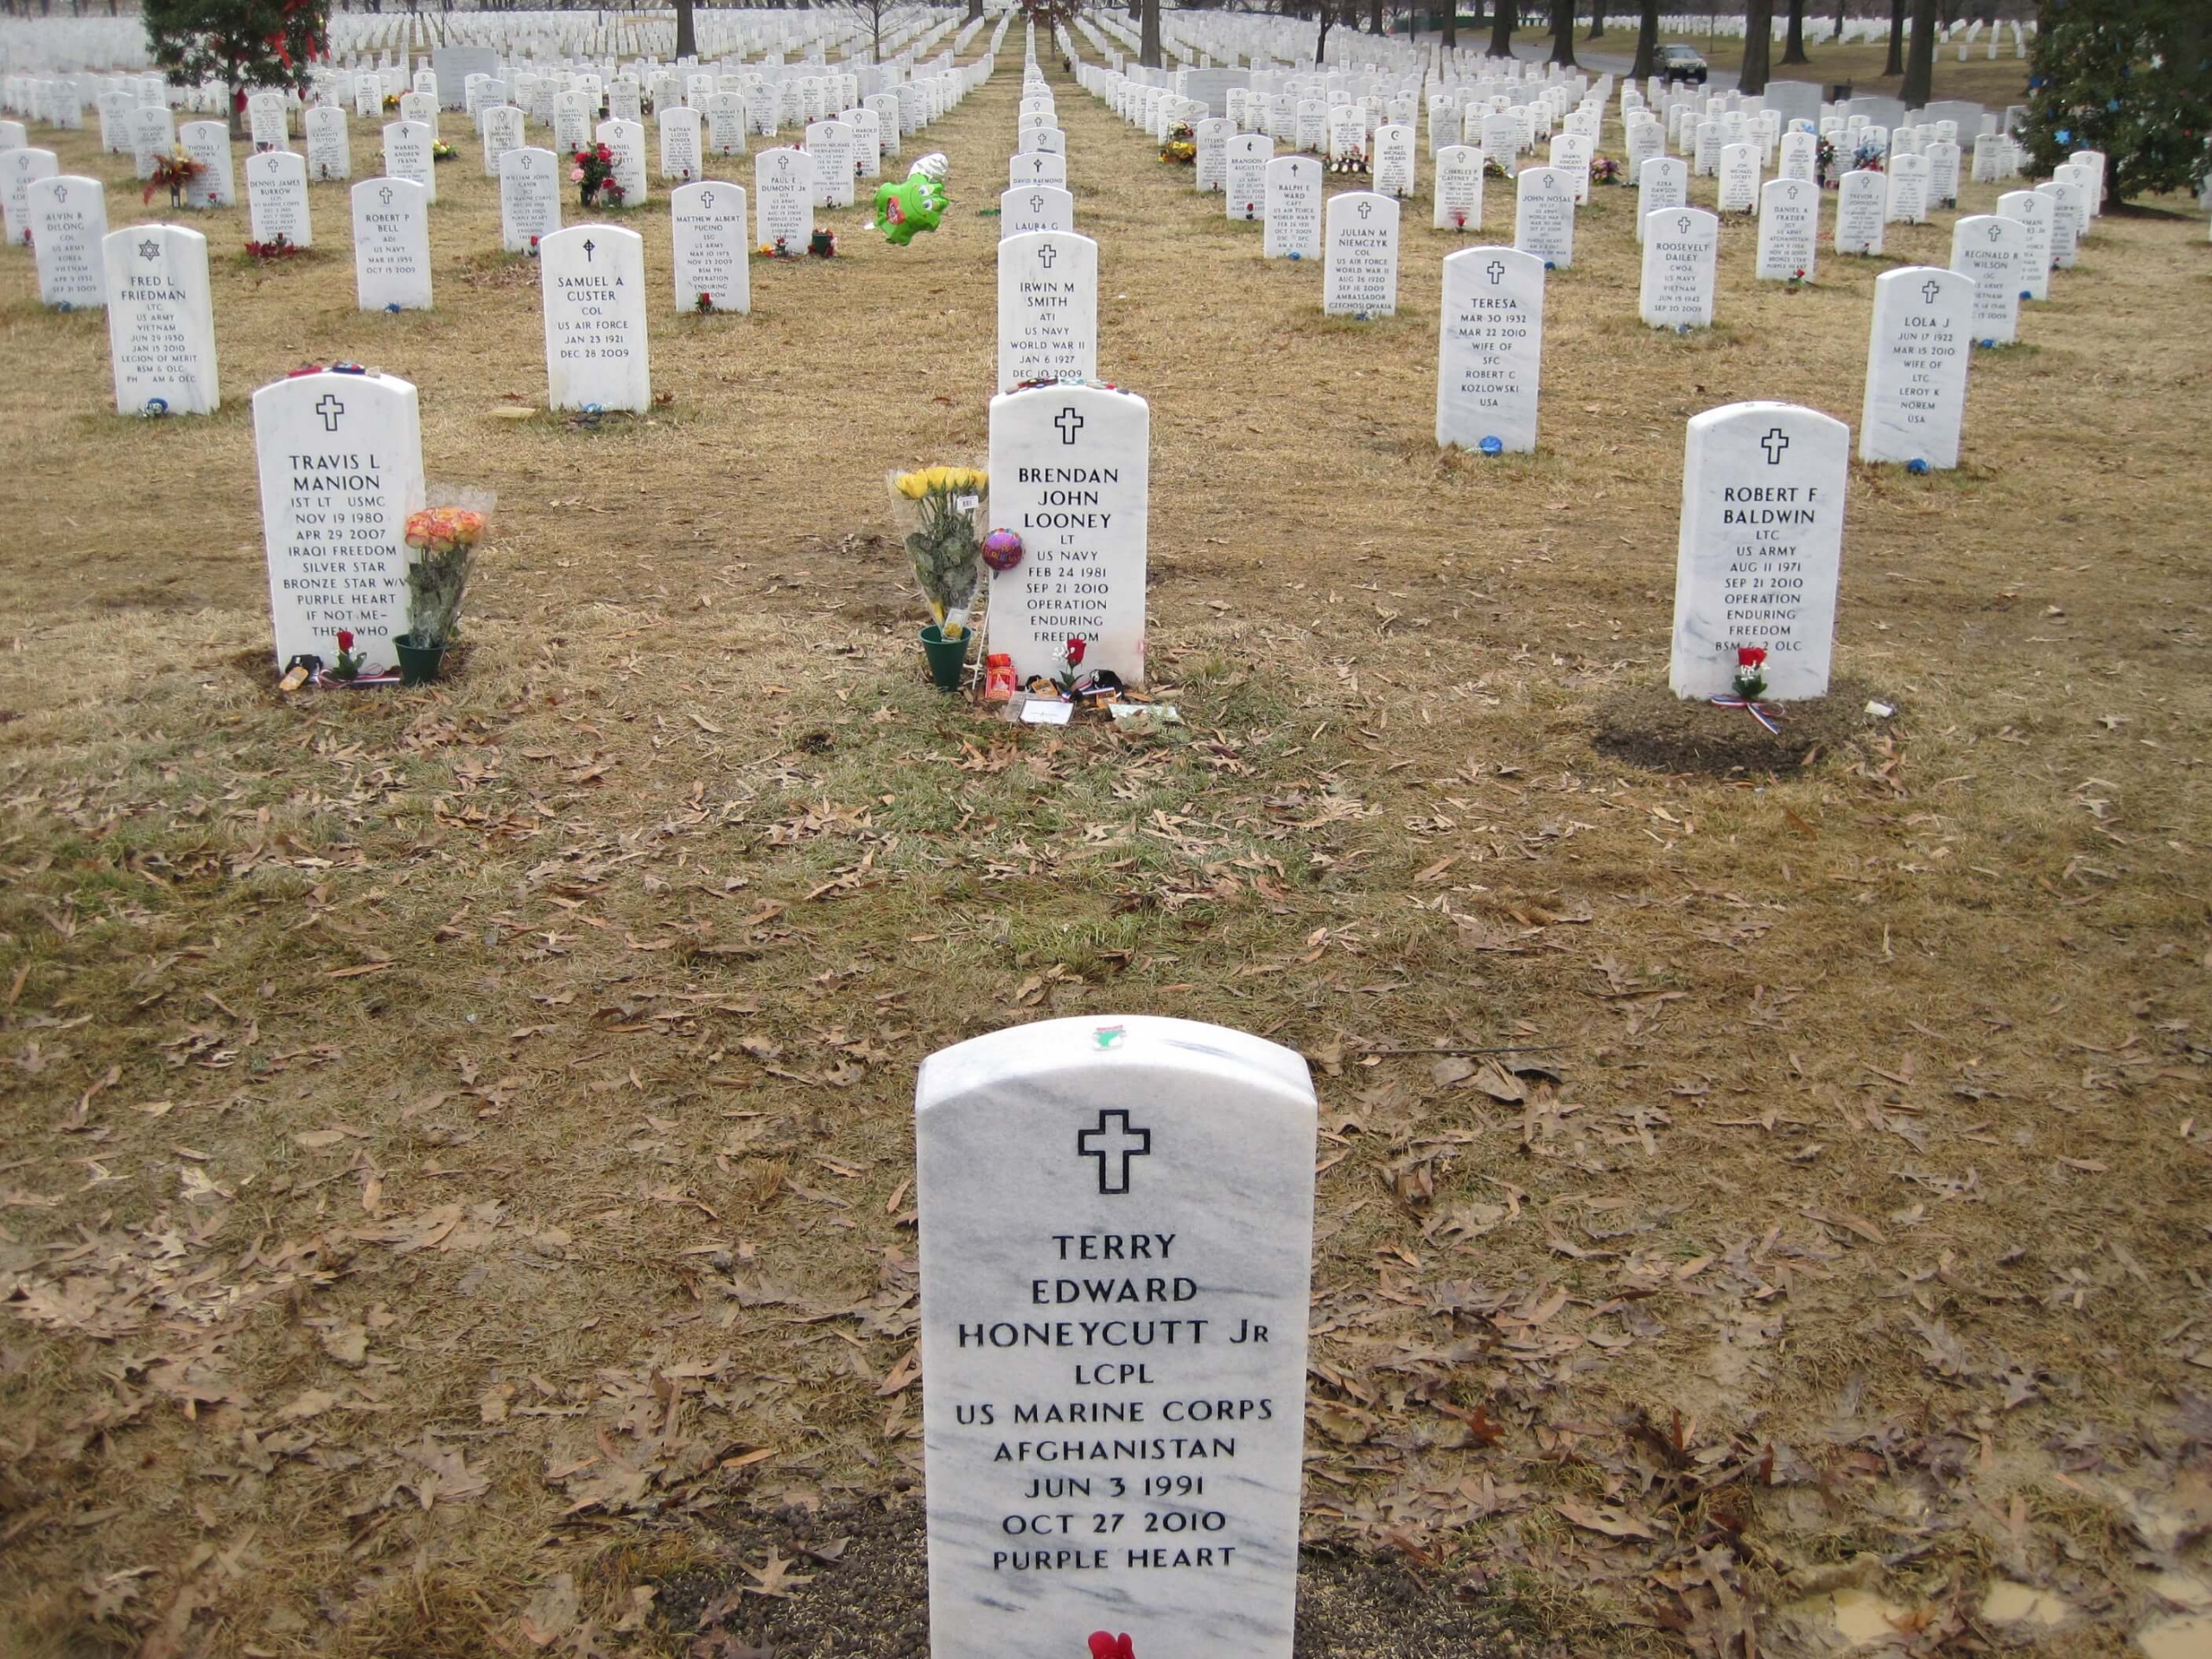 tehoneycuttjr-gravesite-photo-by-eileen-horan-february-2011-001